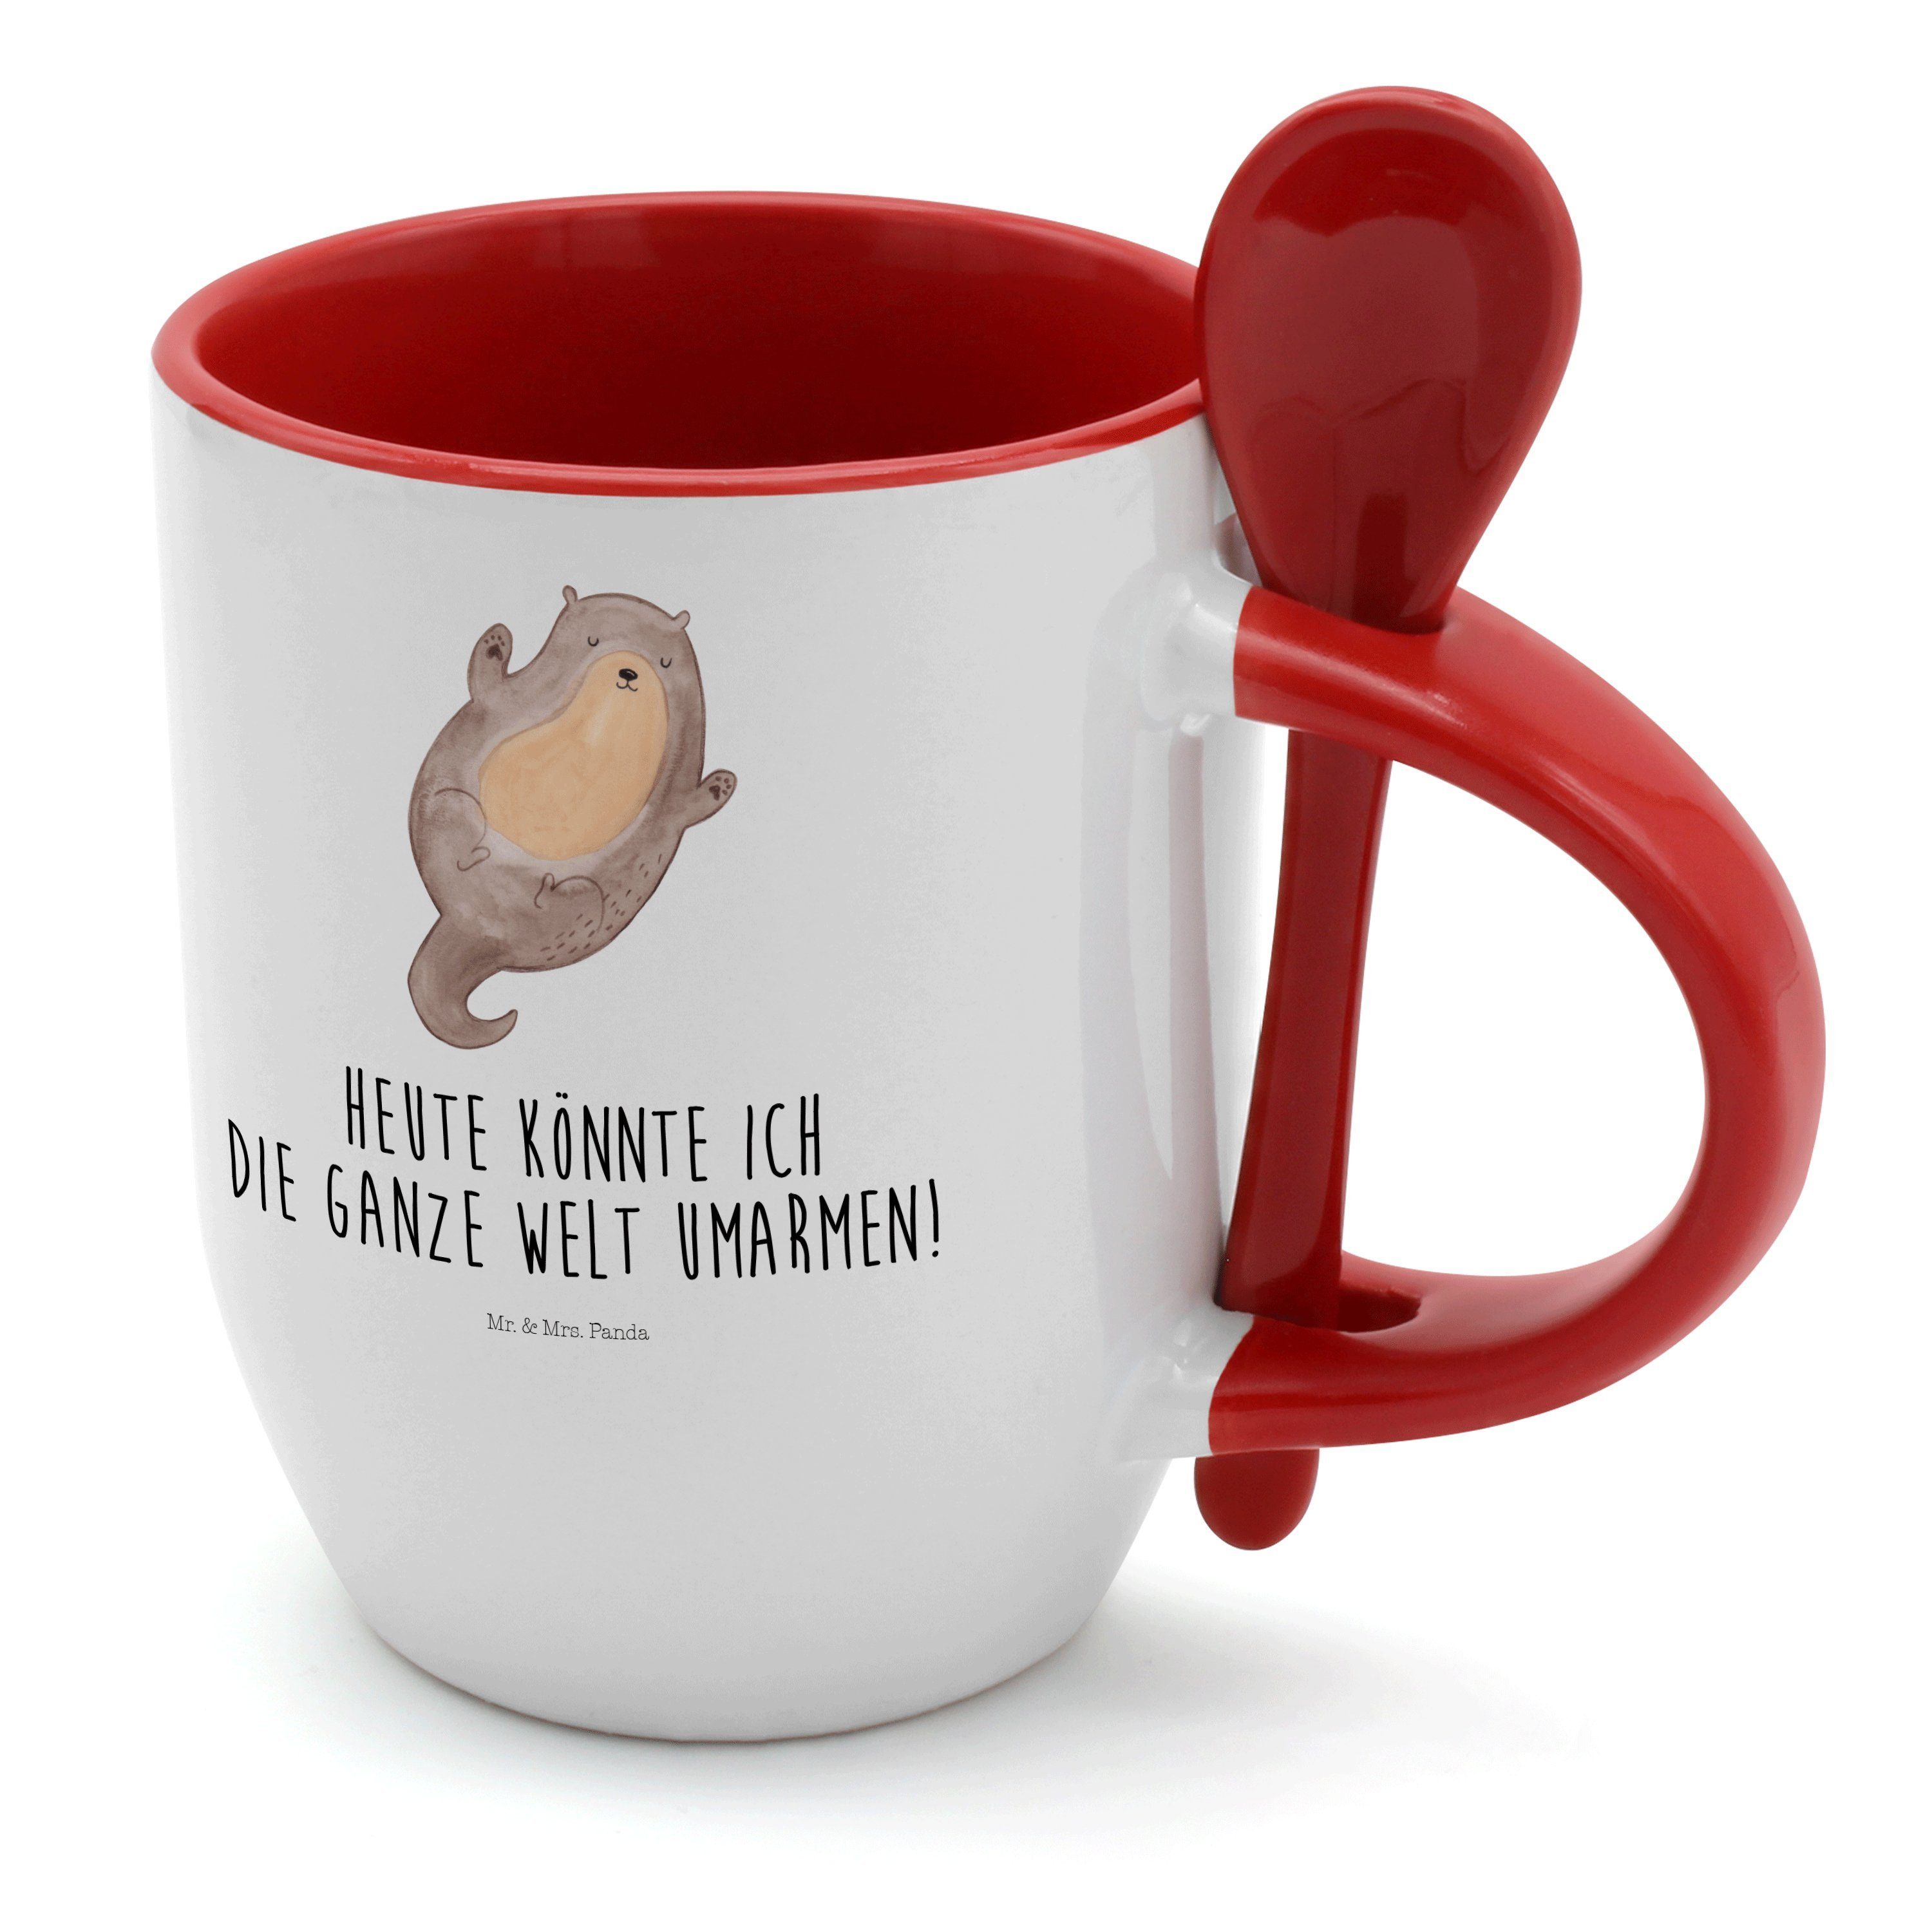 Mr. & Mrs. Panda Tasse Otter Umarmen - Weiß - Geschenk, Kaffeebecher, Seeotter, Tasse, glüc, Keramik